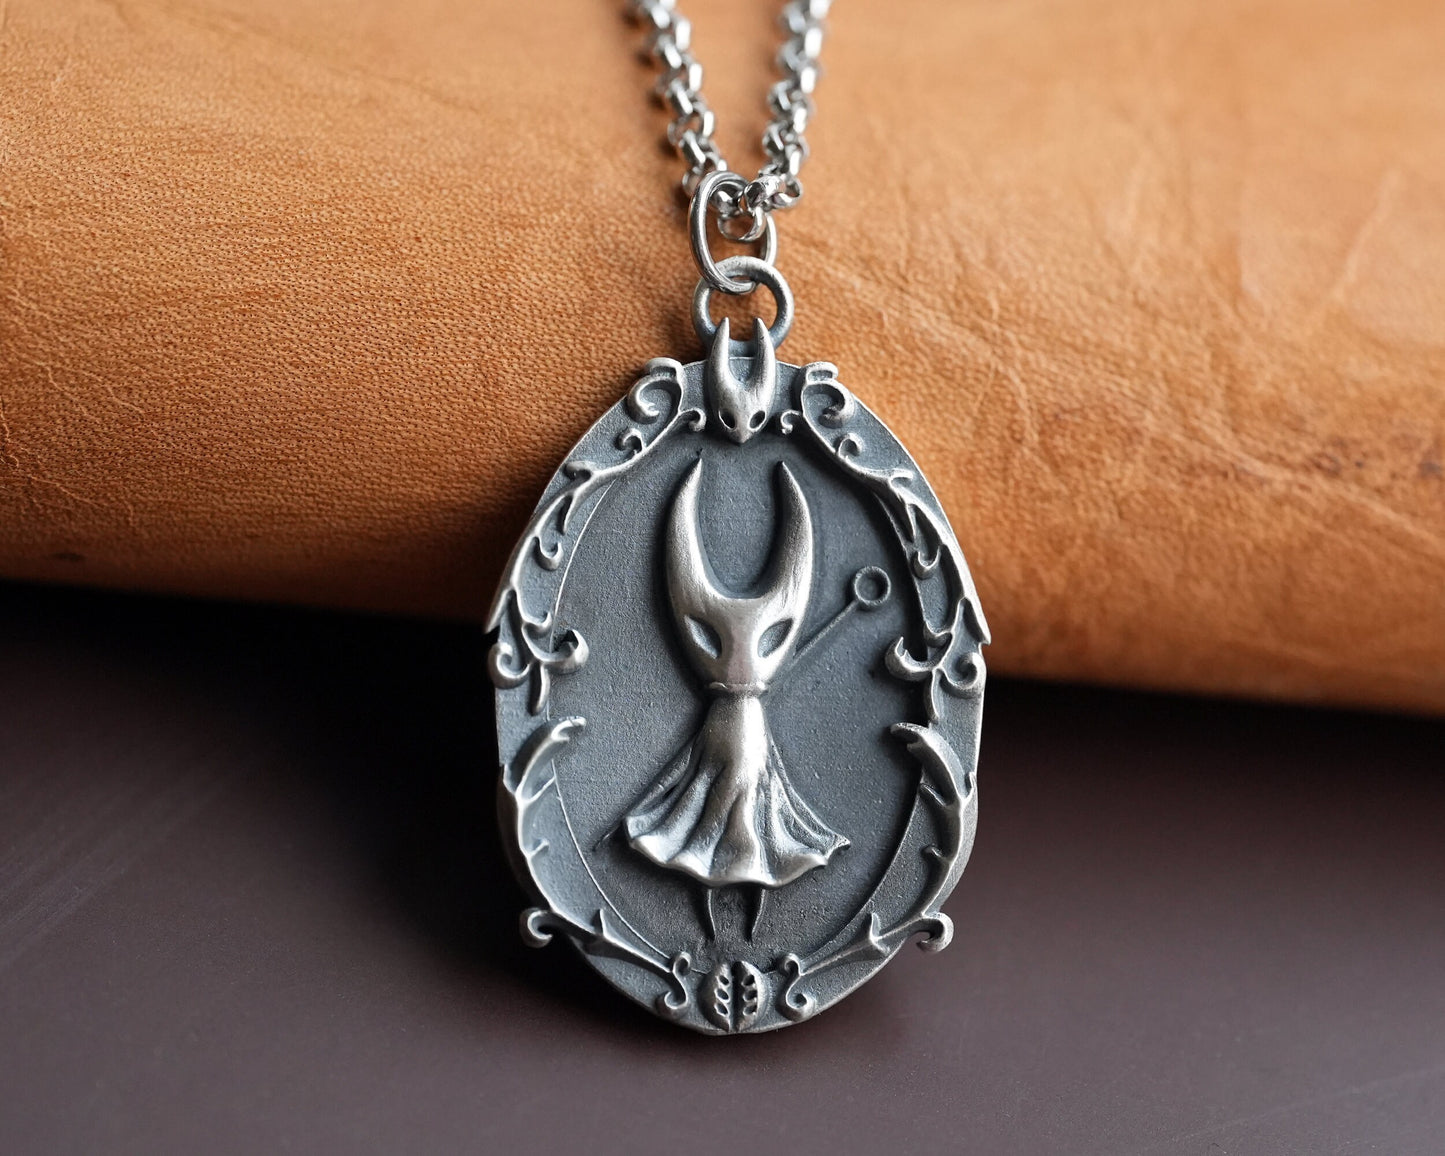 Hollow Knight Silksong Needle Pendant Necklace Charm Jewelry Charm - Baldur Jewelry